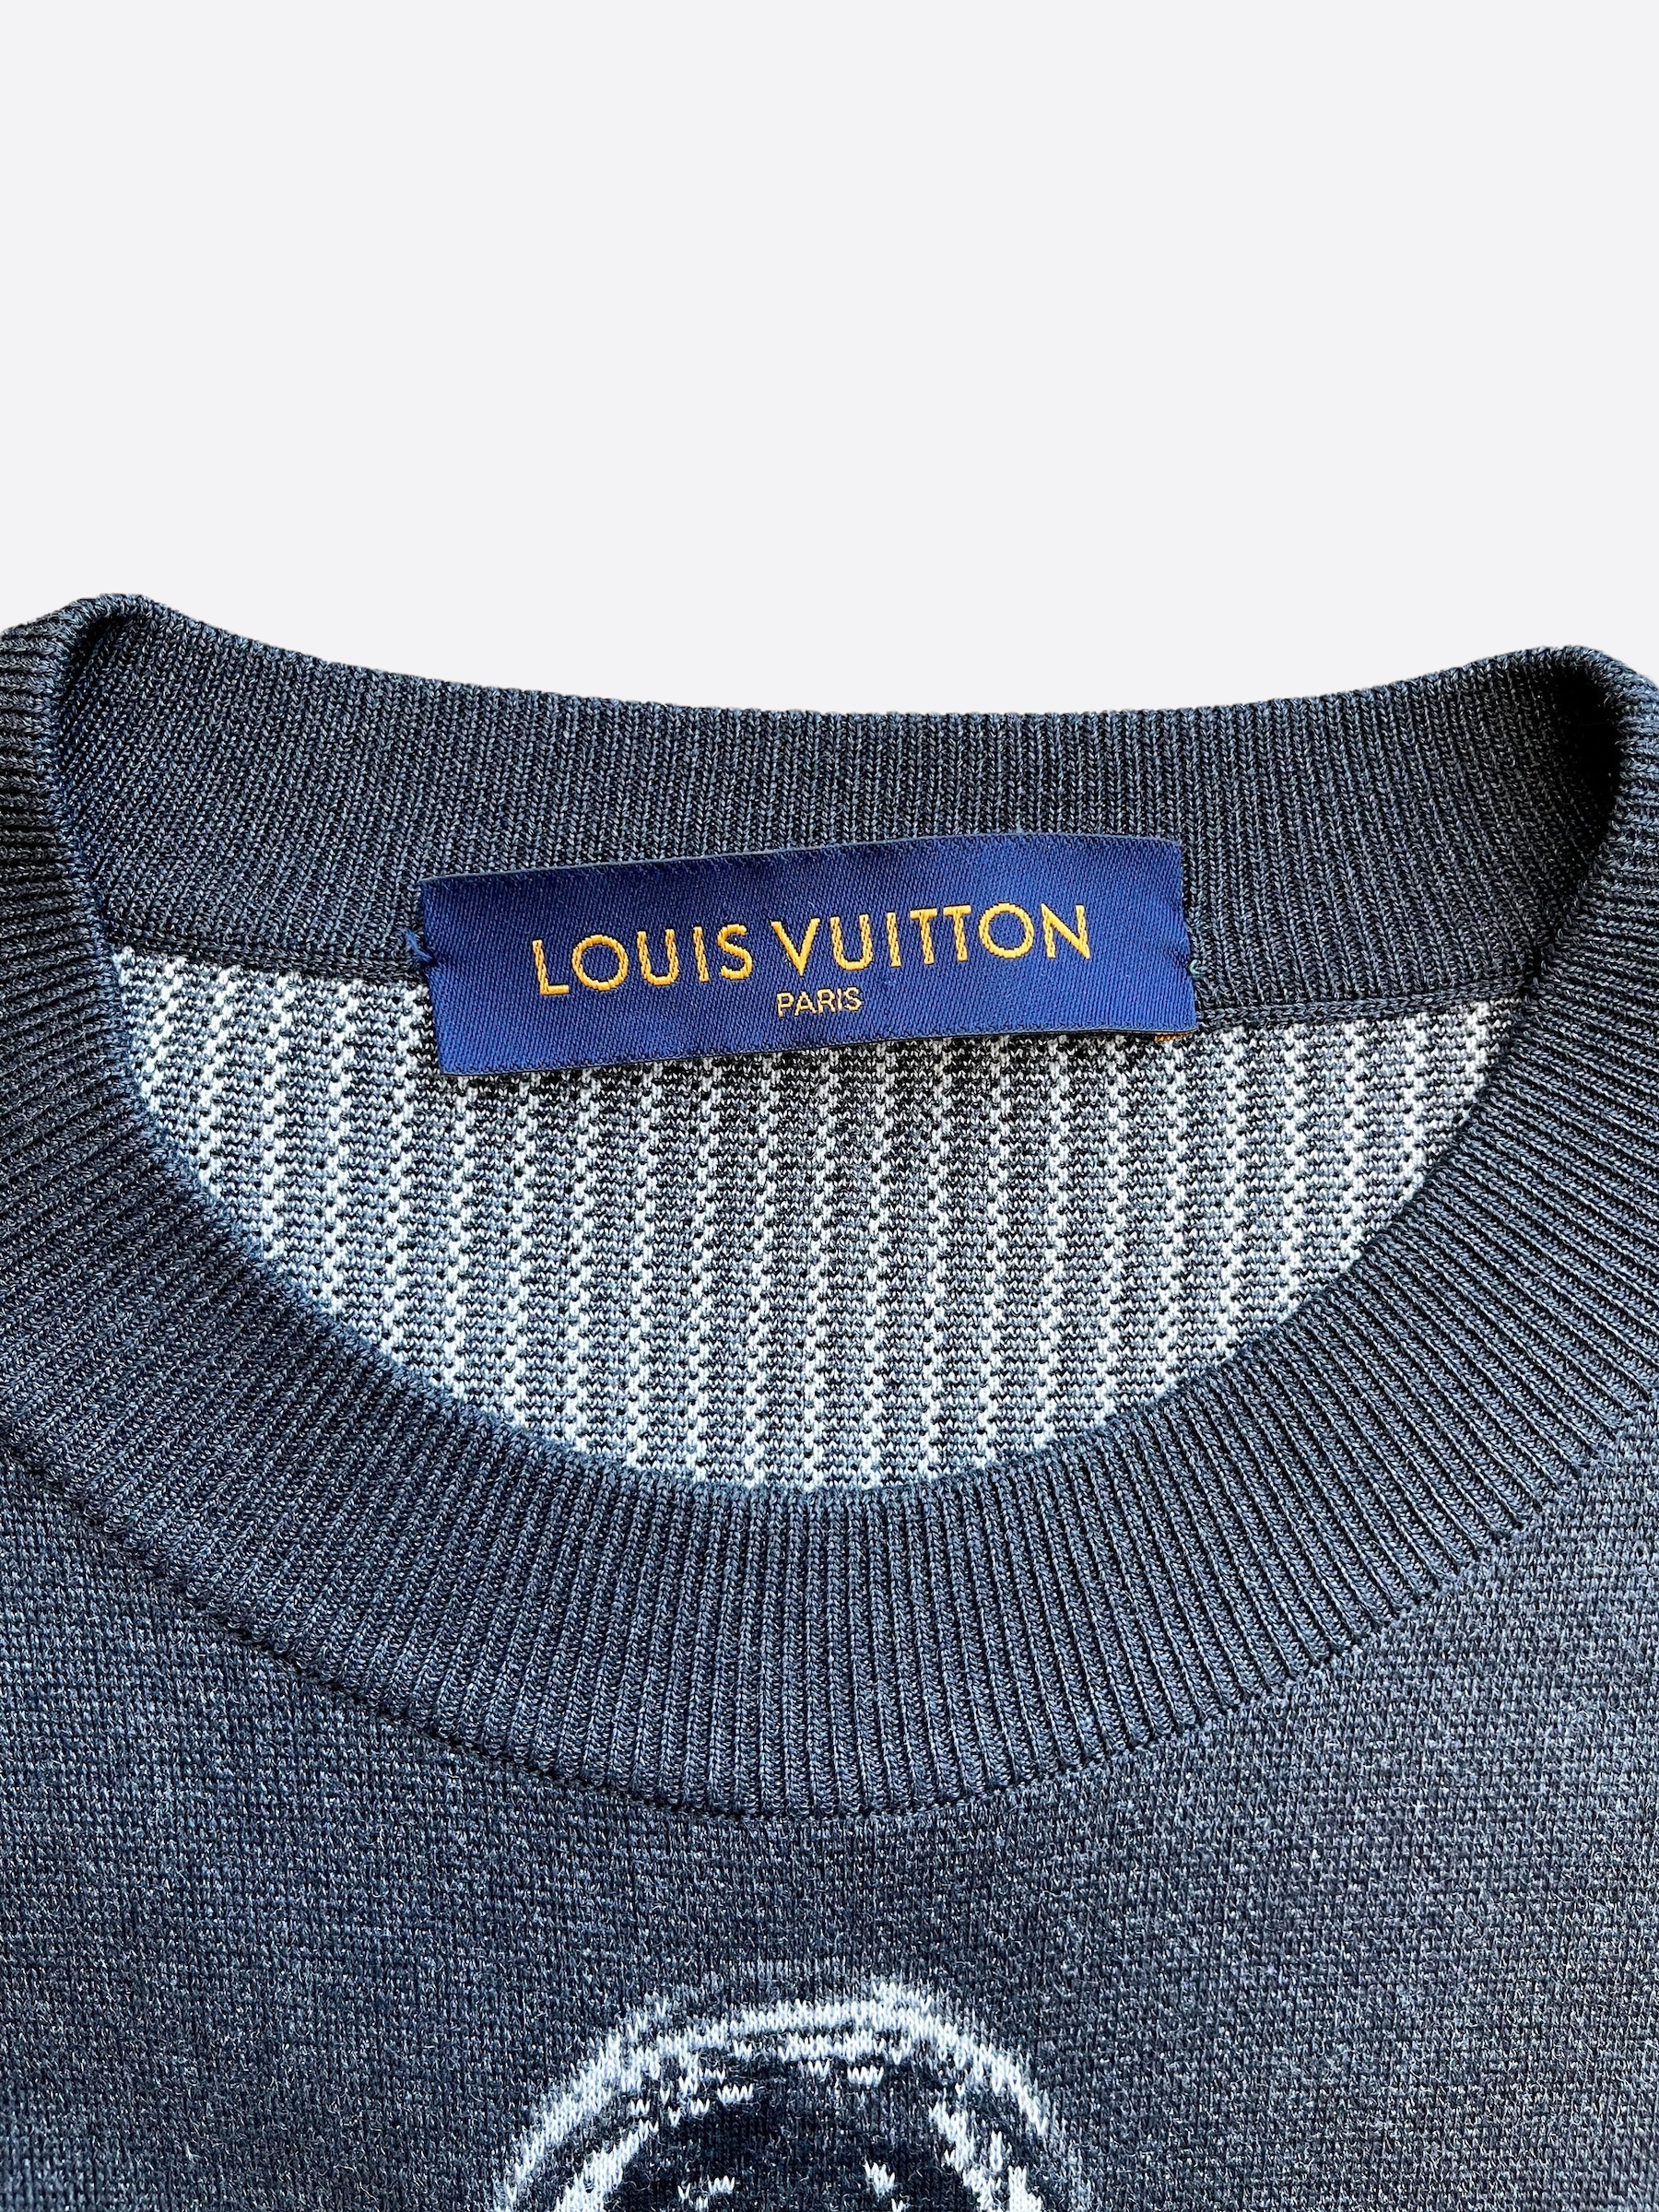 Louis Vuitton SS2019 Astronaut Space Blanket - Ākaibu Store